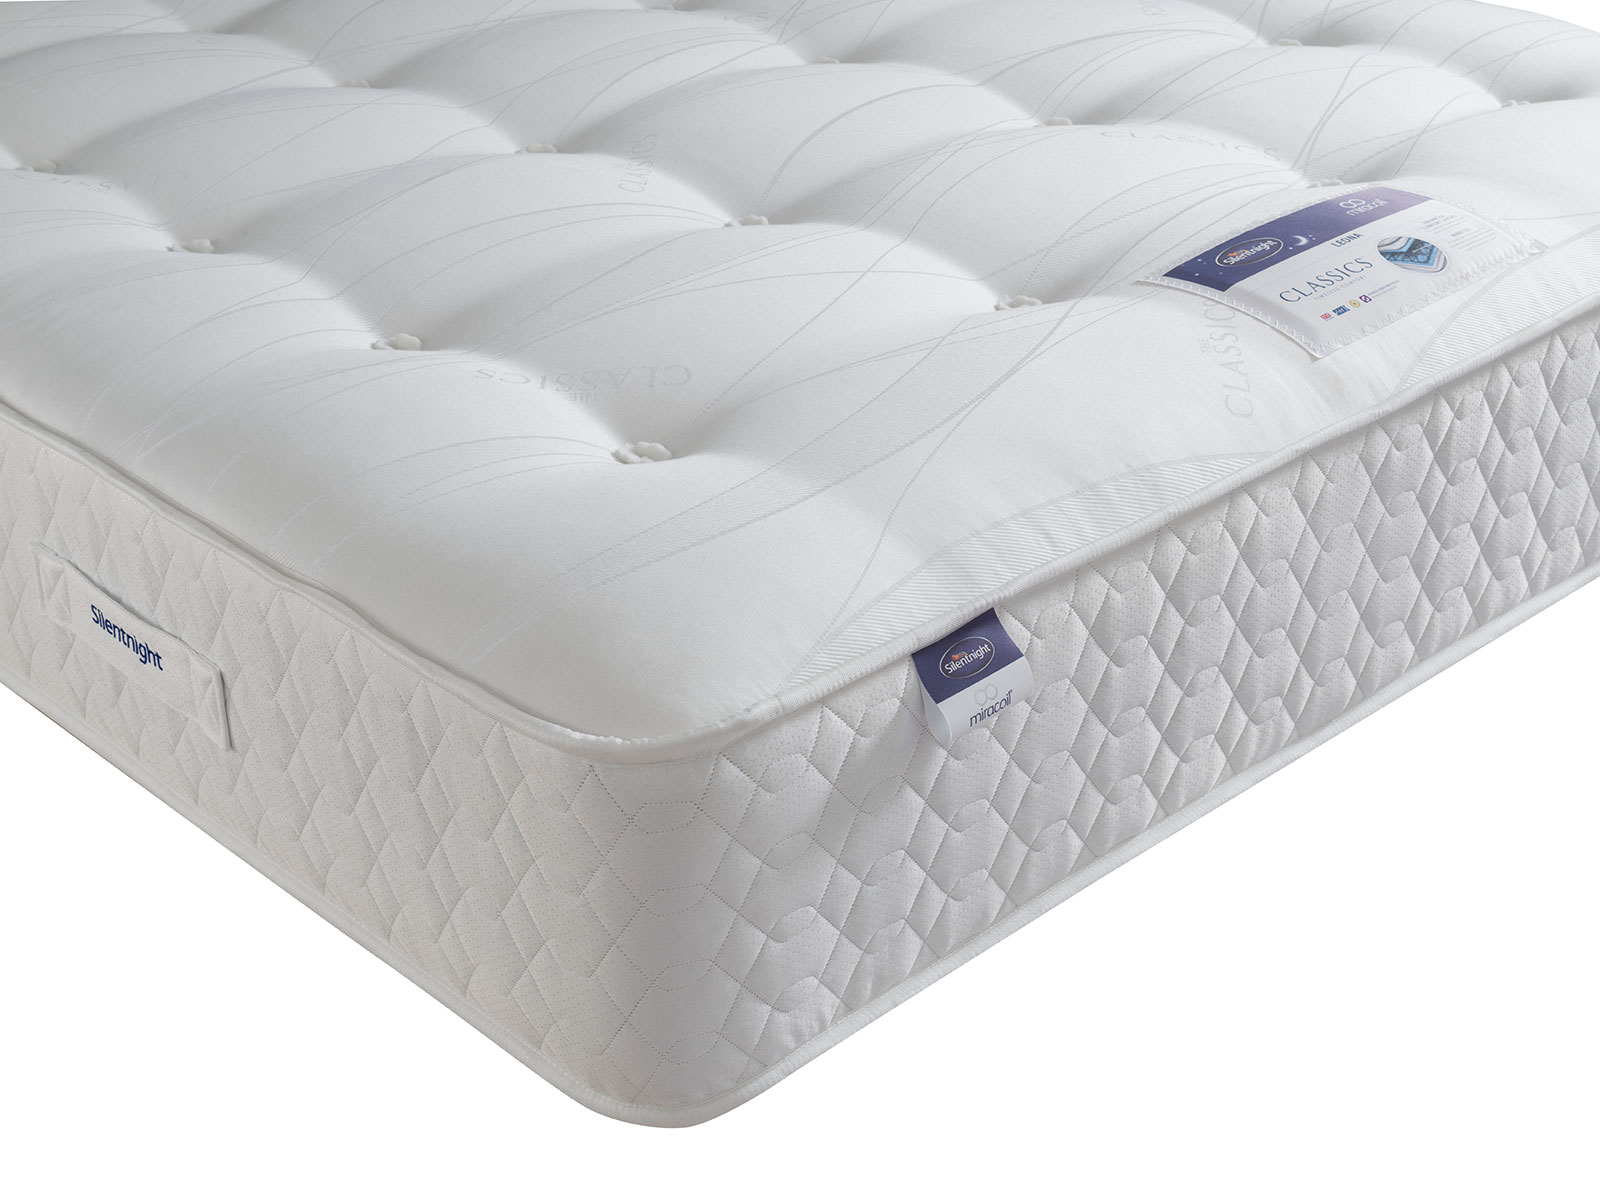 miracoil single mattress price